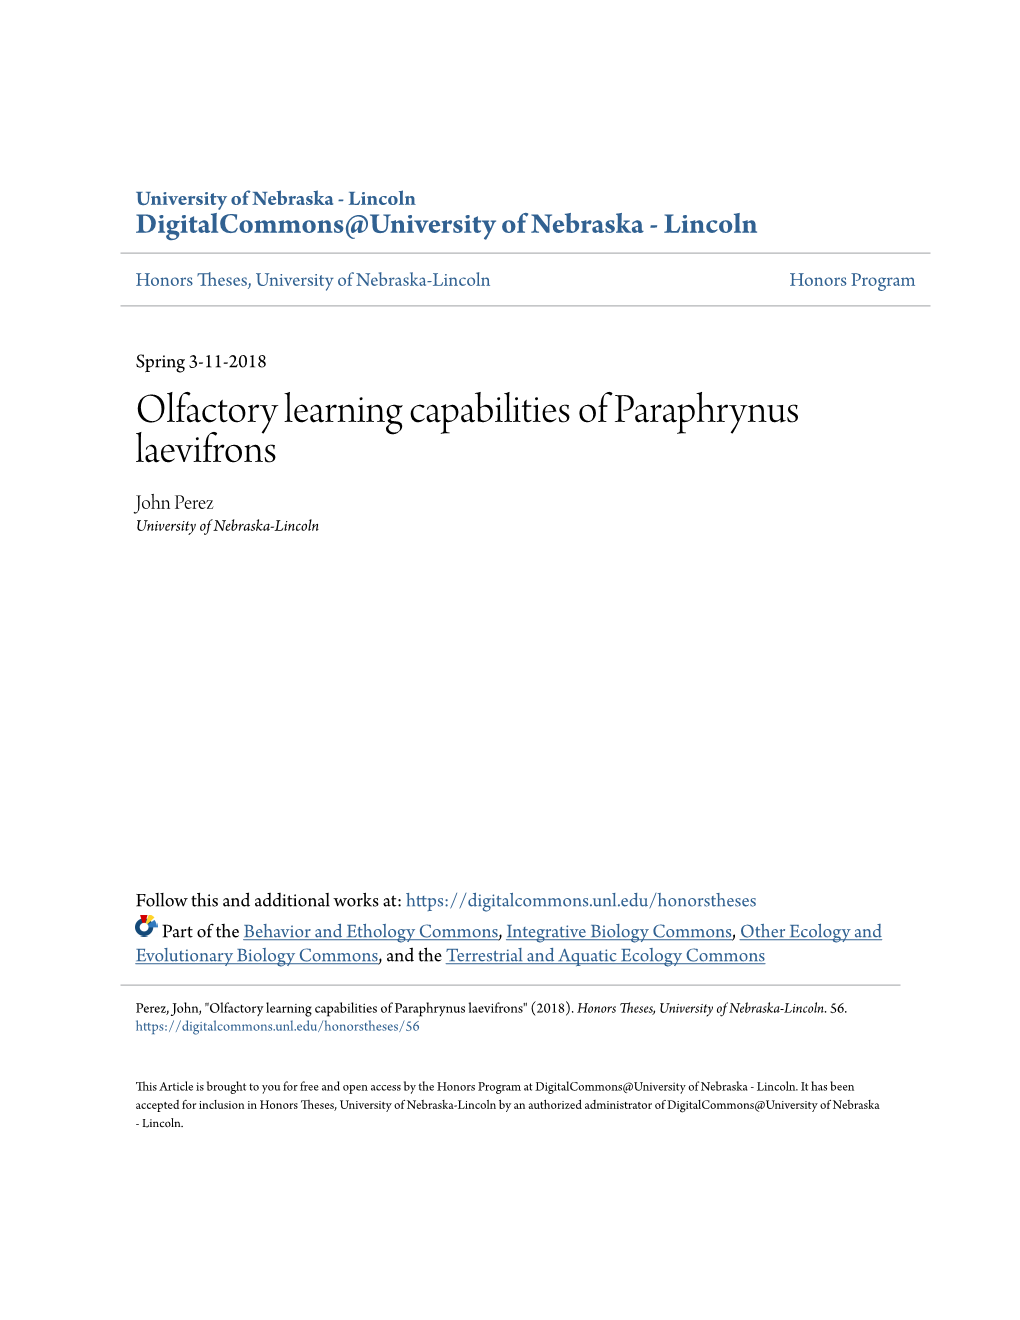 Olfactory Learning Capabilities of Paraphrynus Laevifrons John Perez University of Nebraska-Lincoln